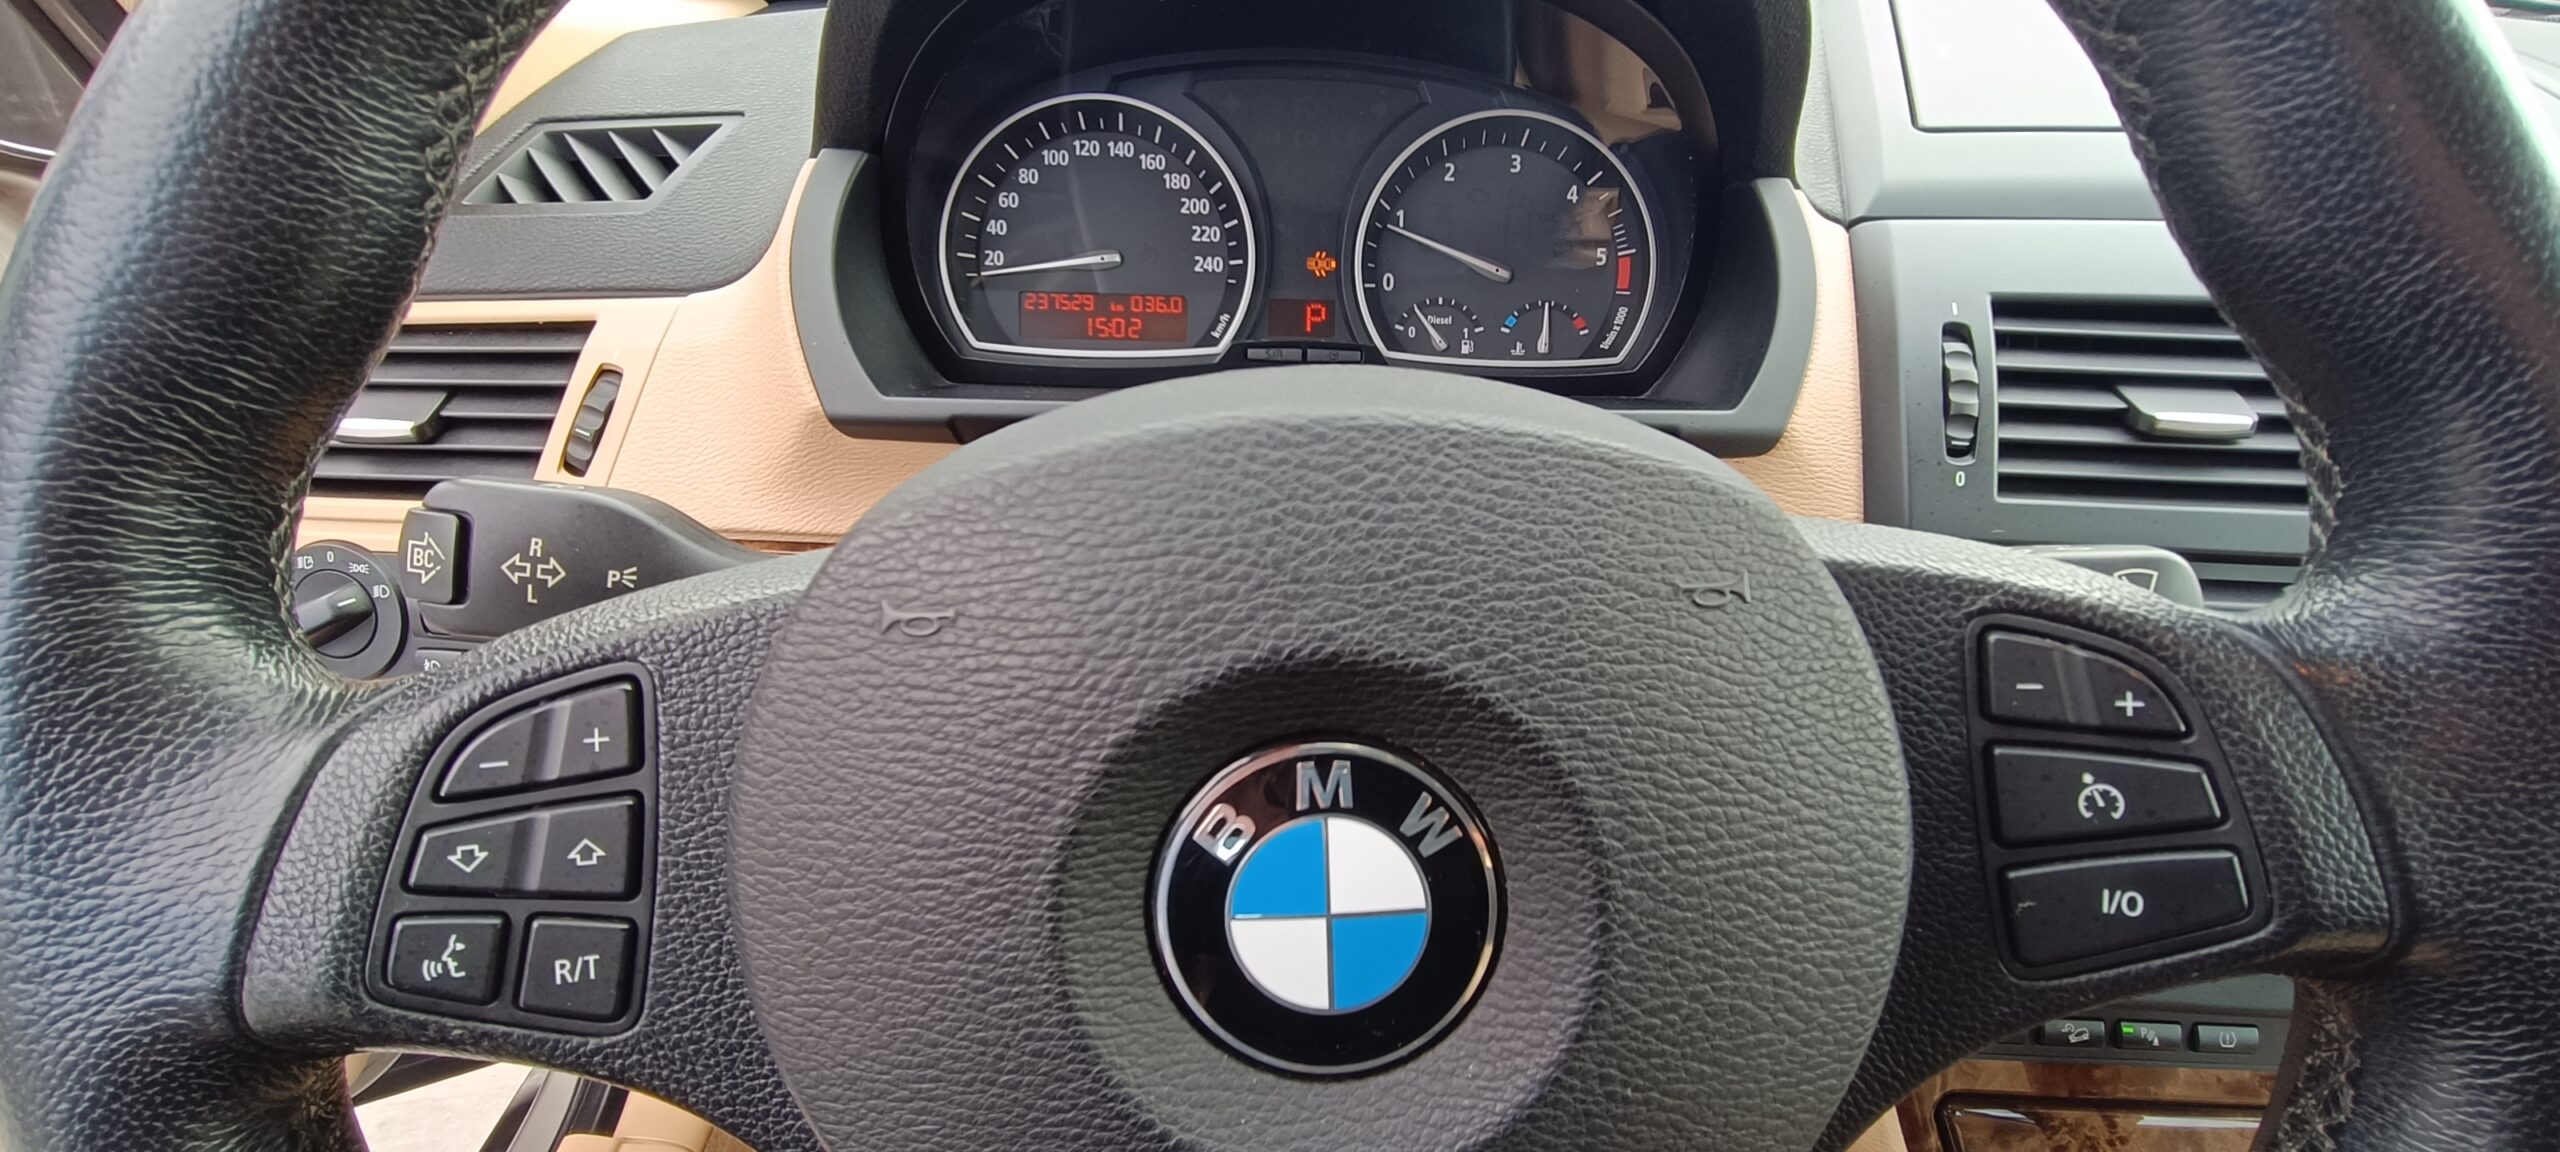 BMW X3 DIESEL 4X4 PANORAMIC